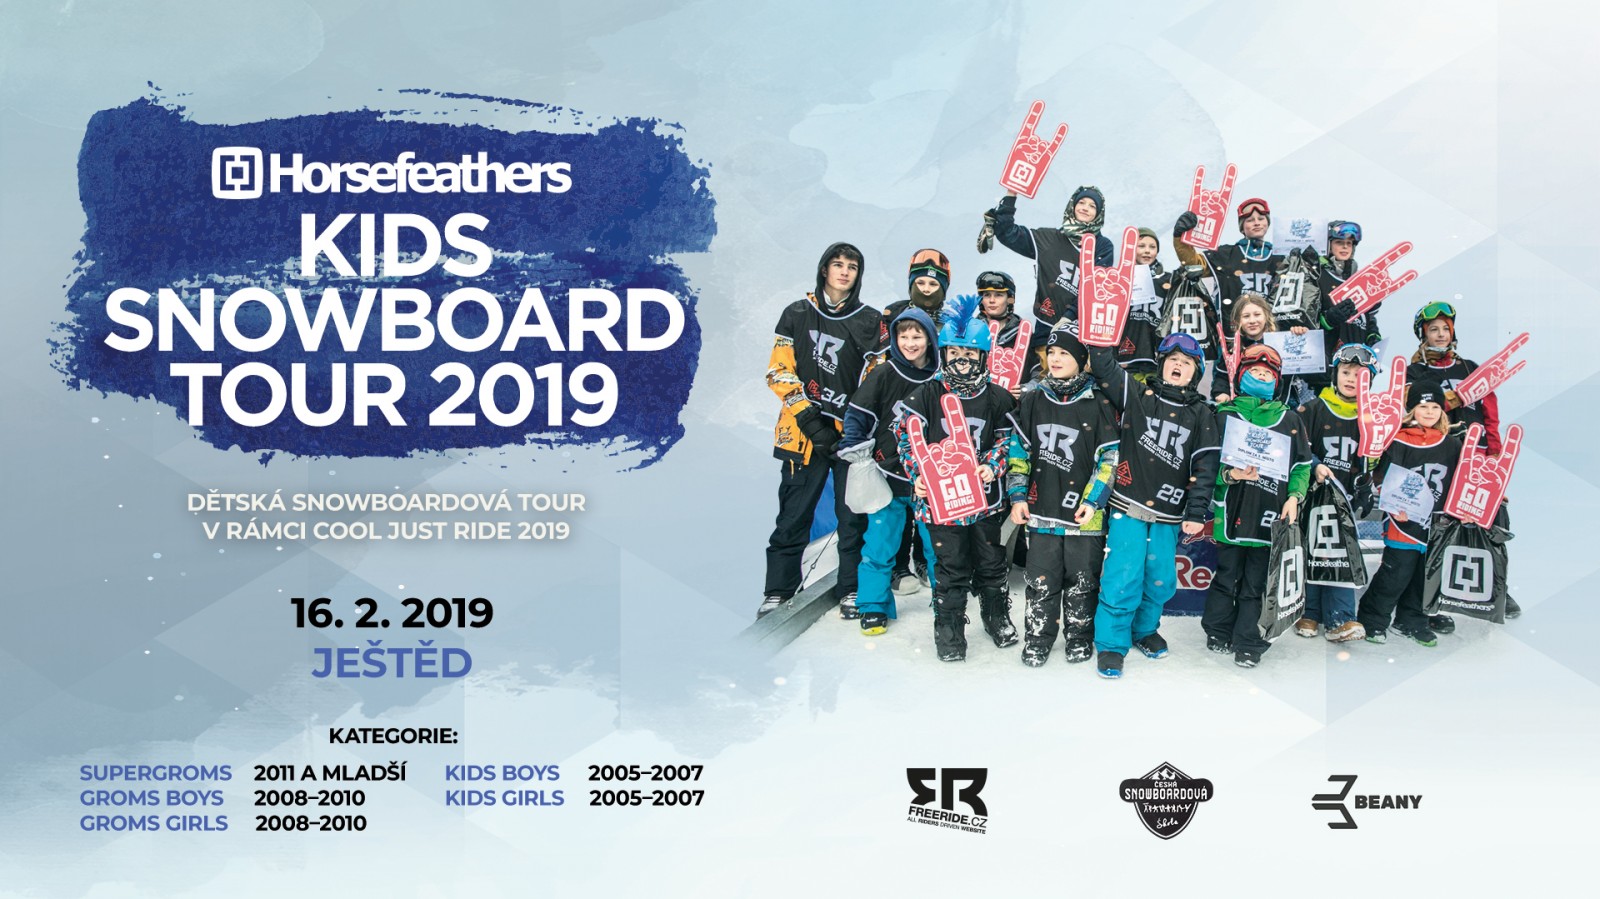 Horsefeathers Kids Snowboard Tour - Ještěd 16. 2. 2019